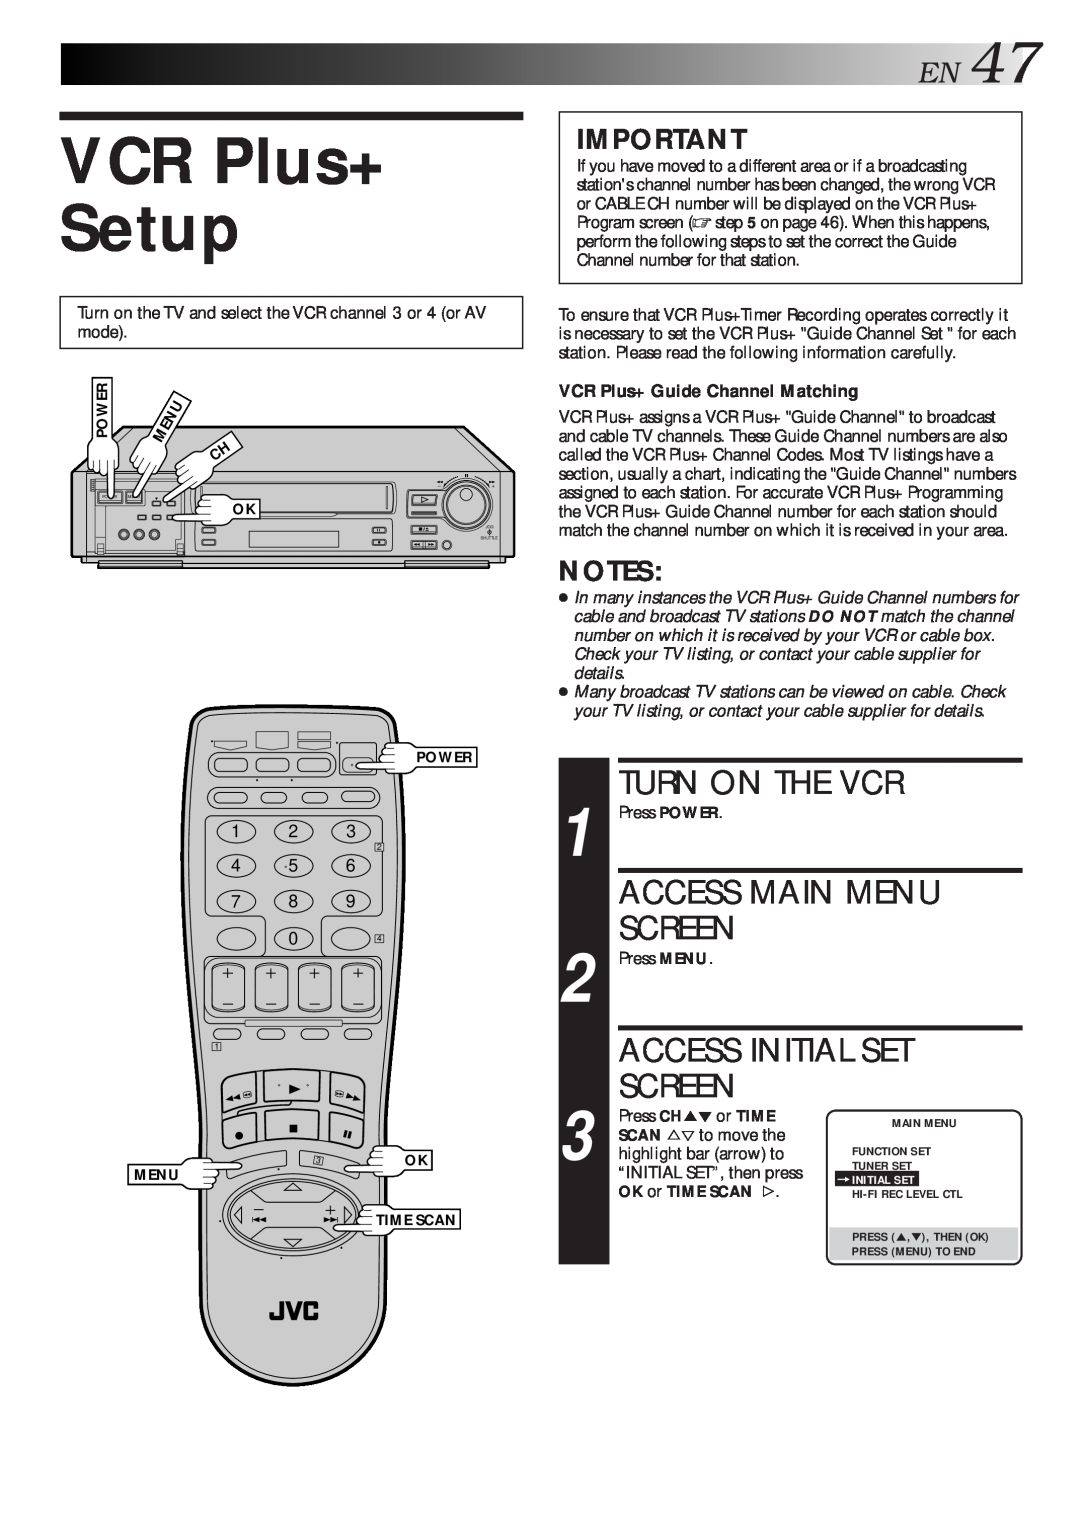 JVC HR-S7500U VCR Plus+ Setup, EN47, Turn On The Vcr, Access Main Menu, Screen, Access Initial Set, OK or TIME SCAN # 